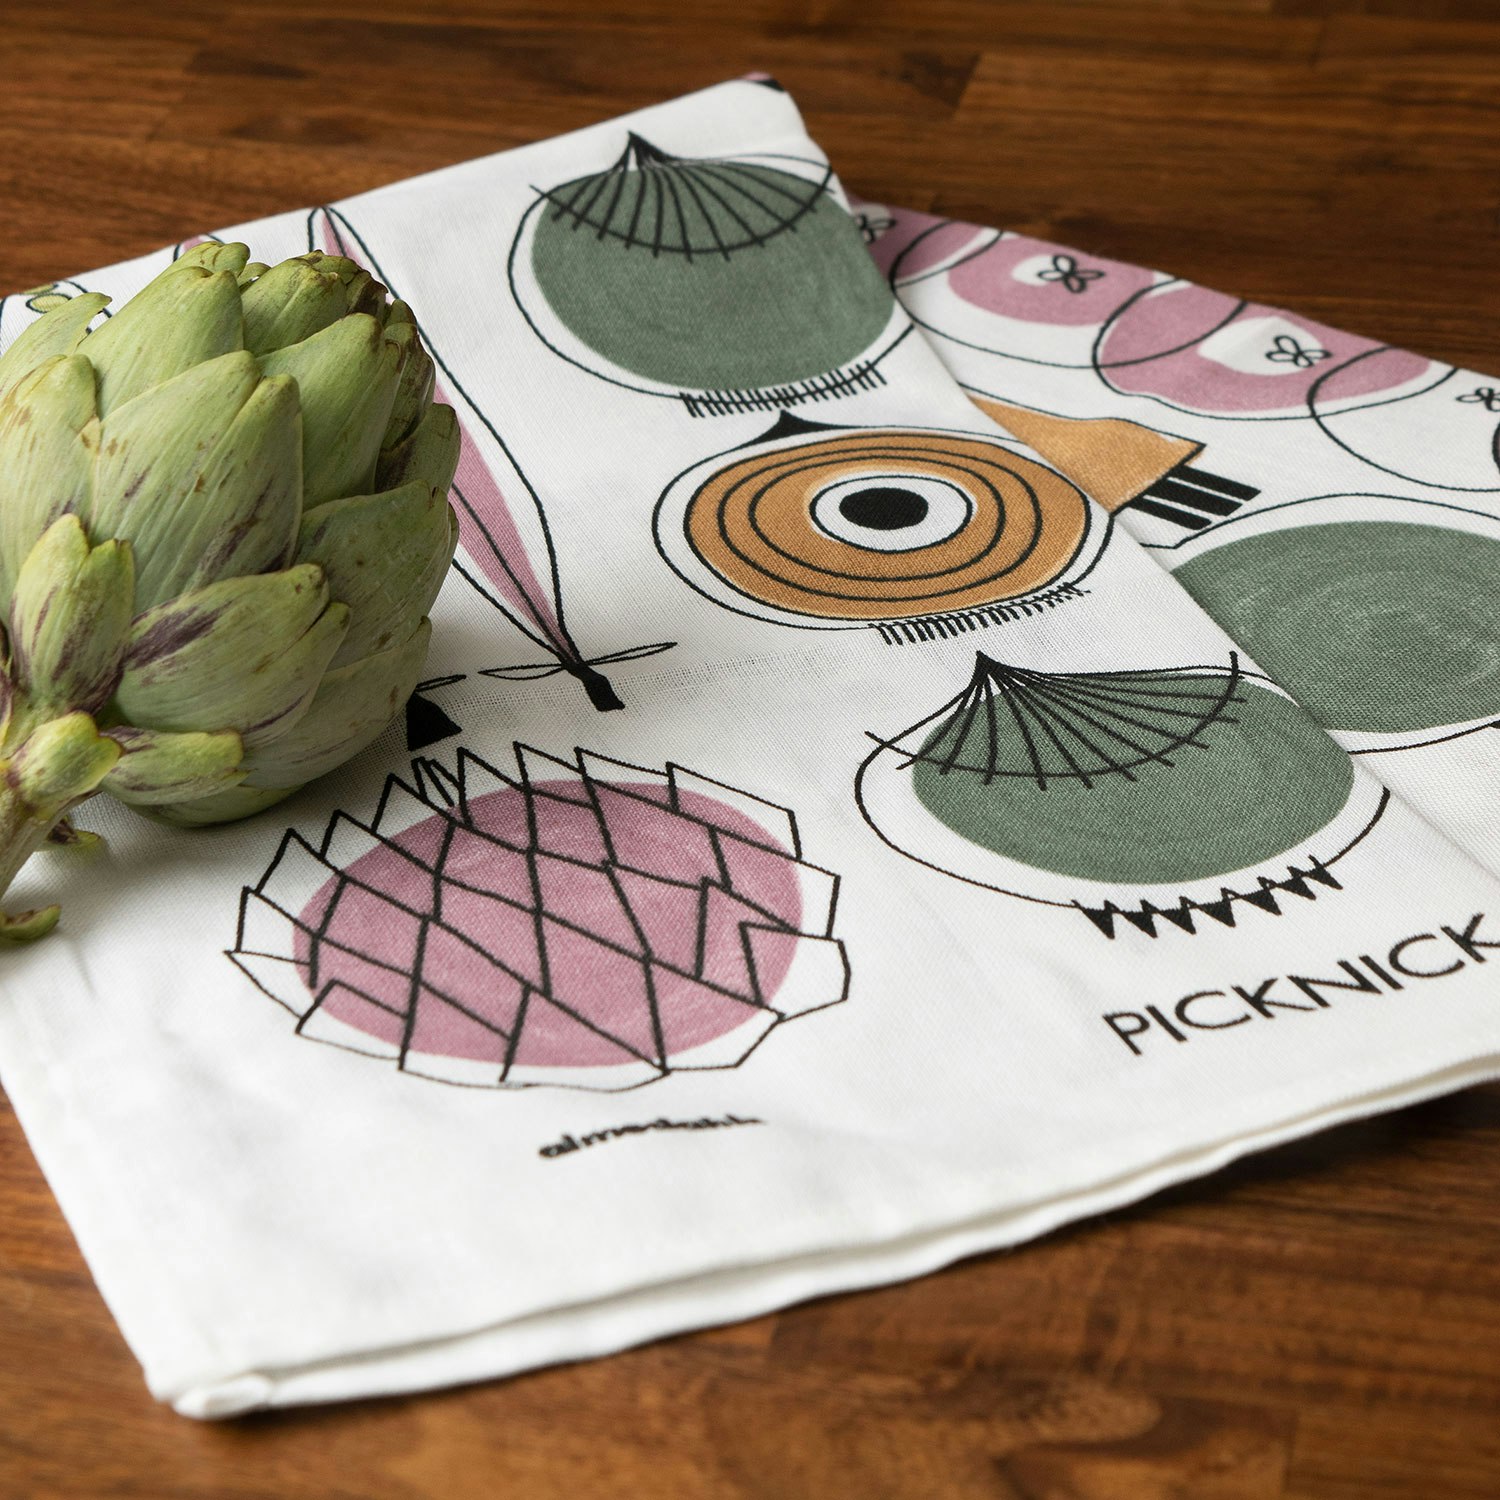 https://royaldesign.com/image/10/almedahls-picknick-kitchen-towel-multi-2